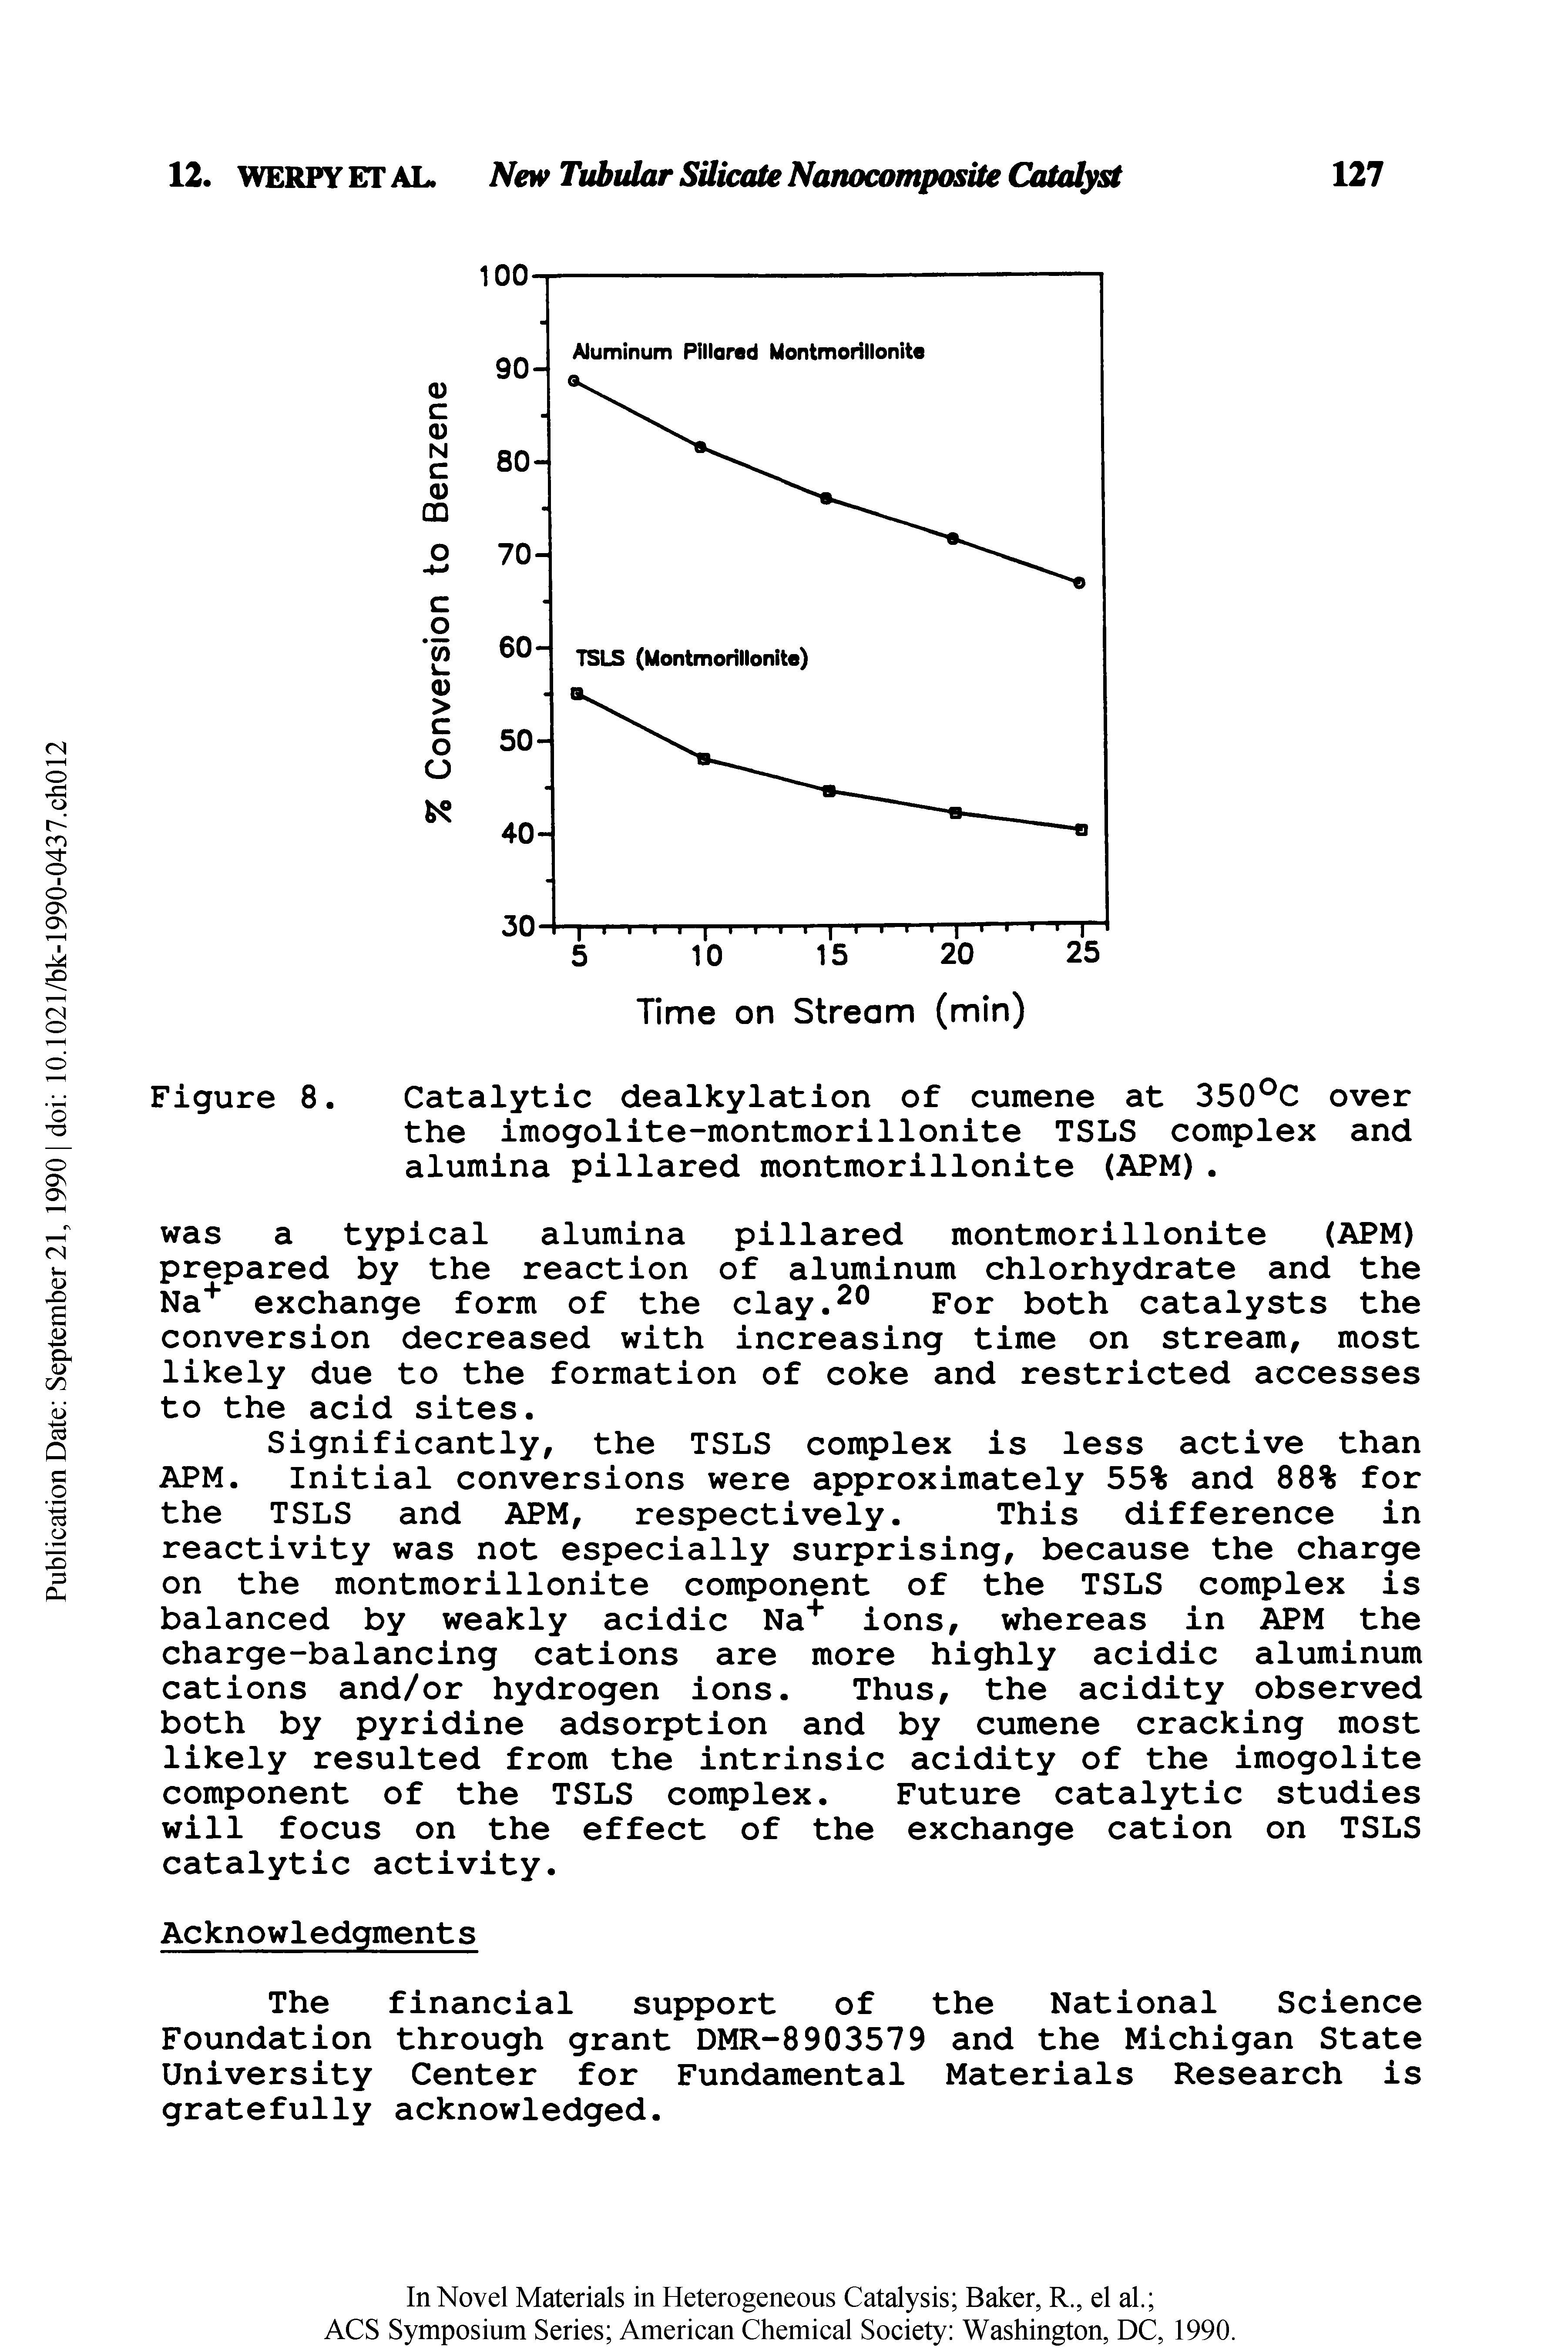 Figure 8. Catalytic dealkylation of cumene at 350 C over the imogolite-montmorillonite TSLS complex and alumina pillared montmorillonite (APM).